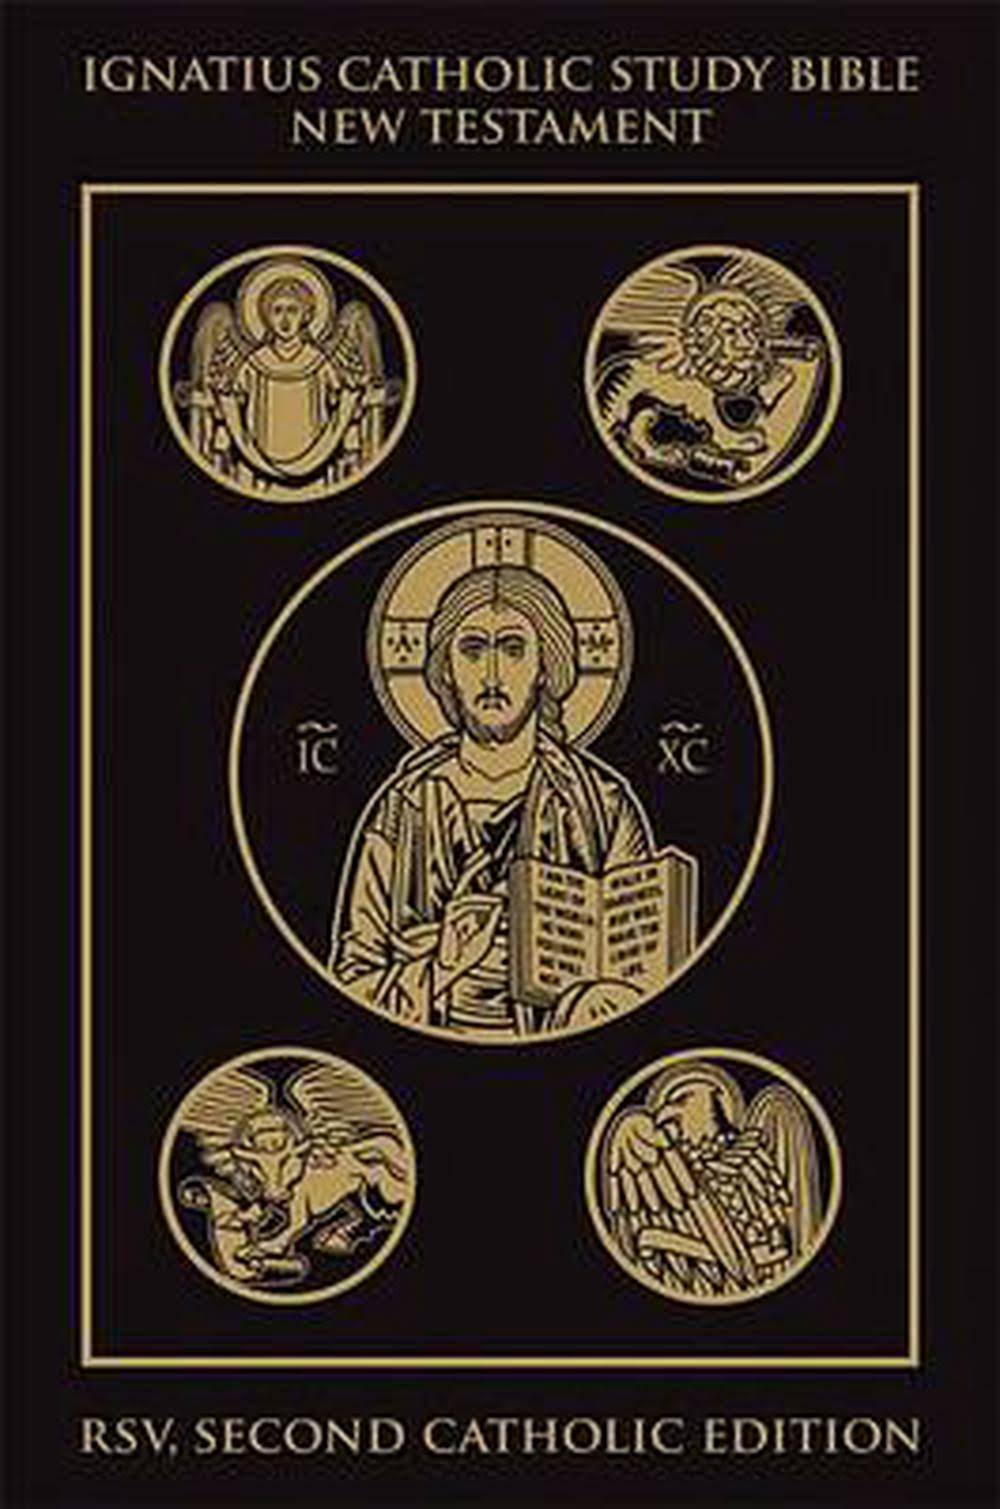 Ignatius Catholic Study Bible: New Testament - Scott Hahn and others